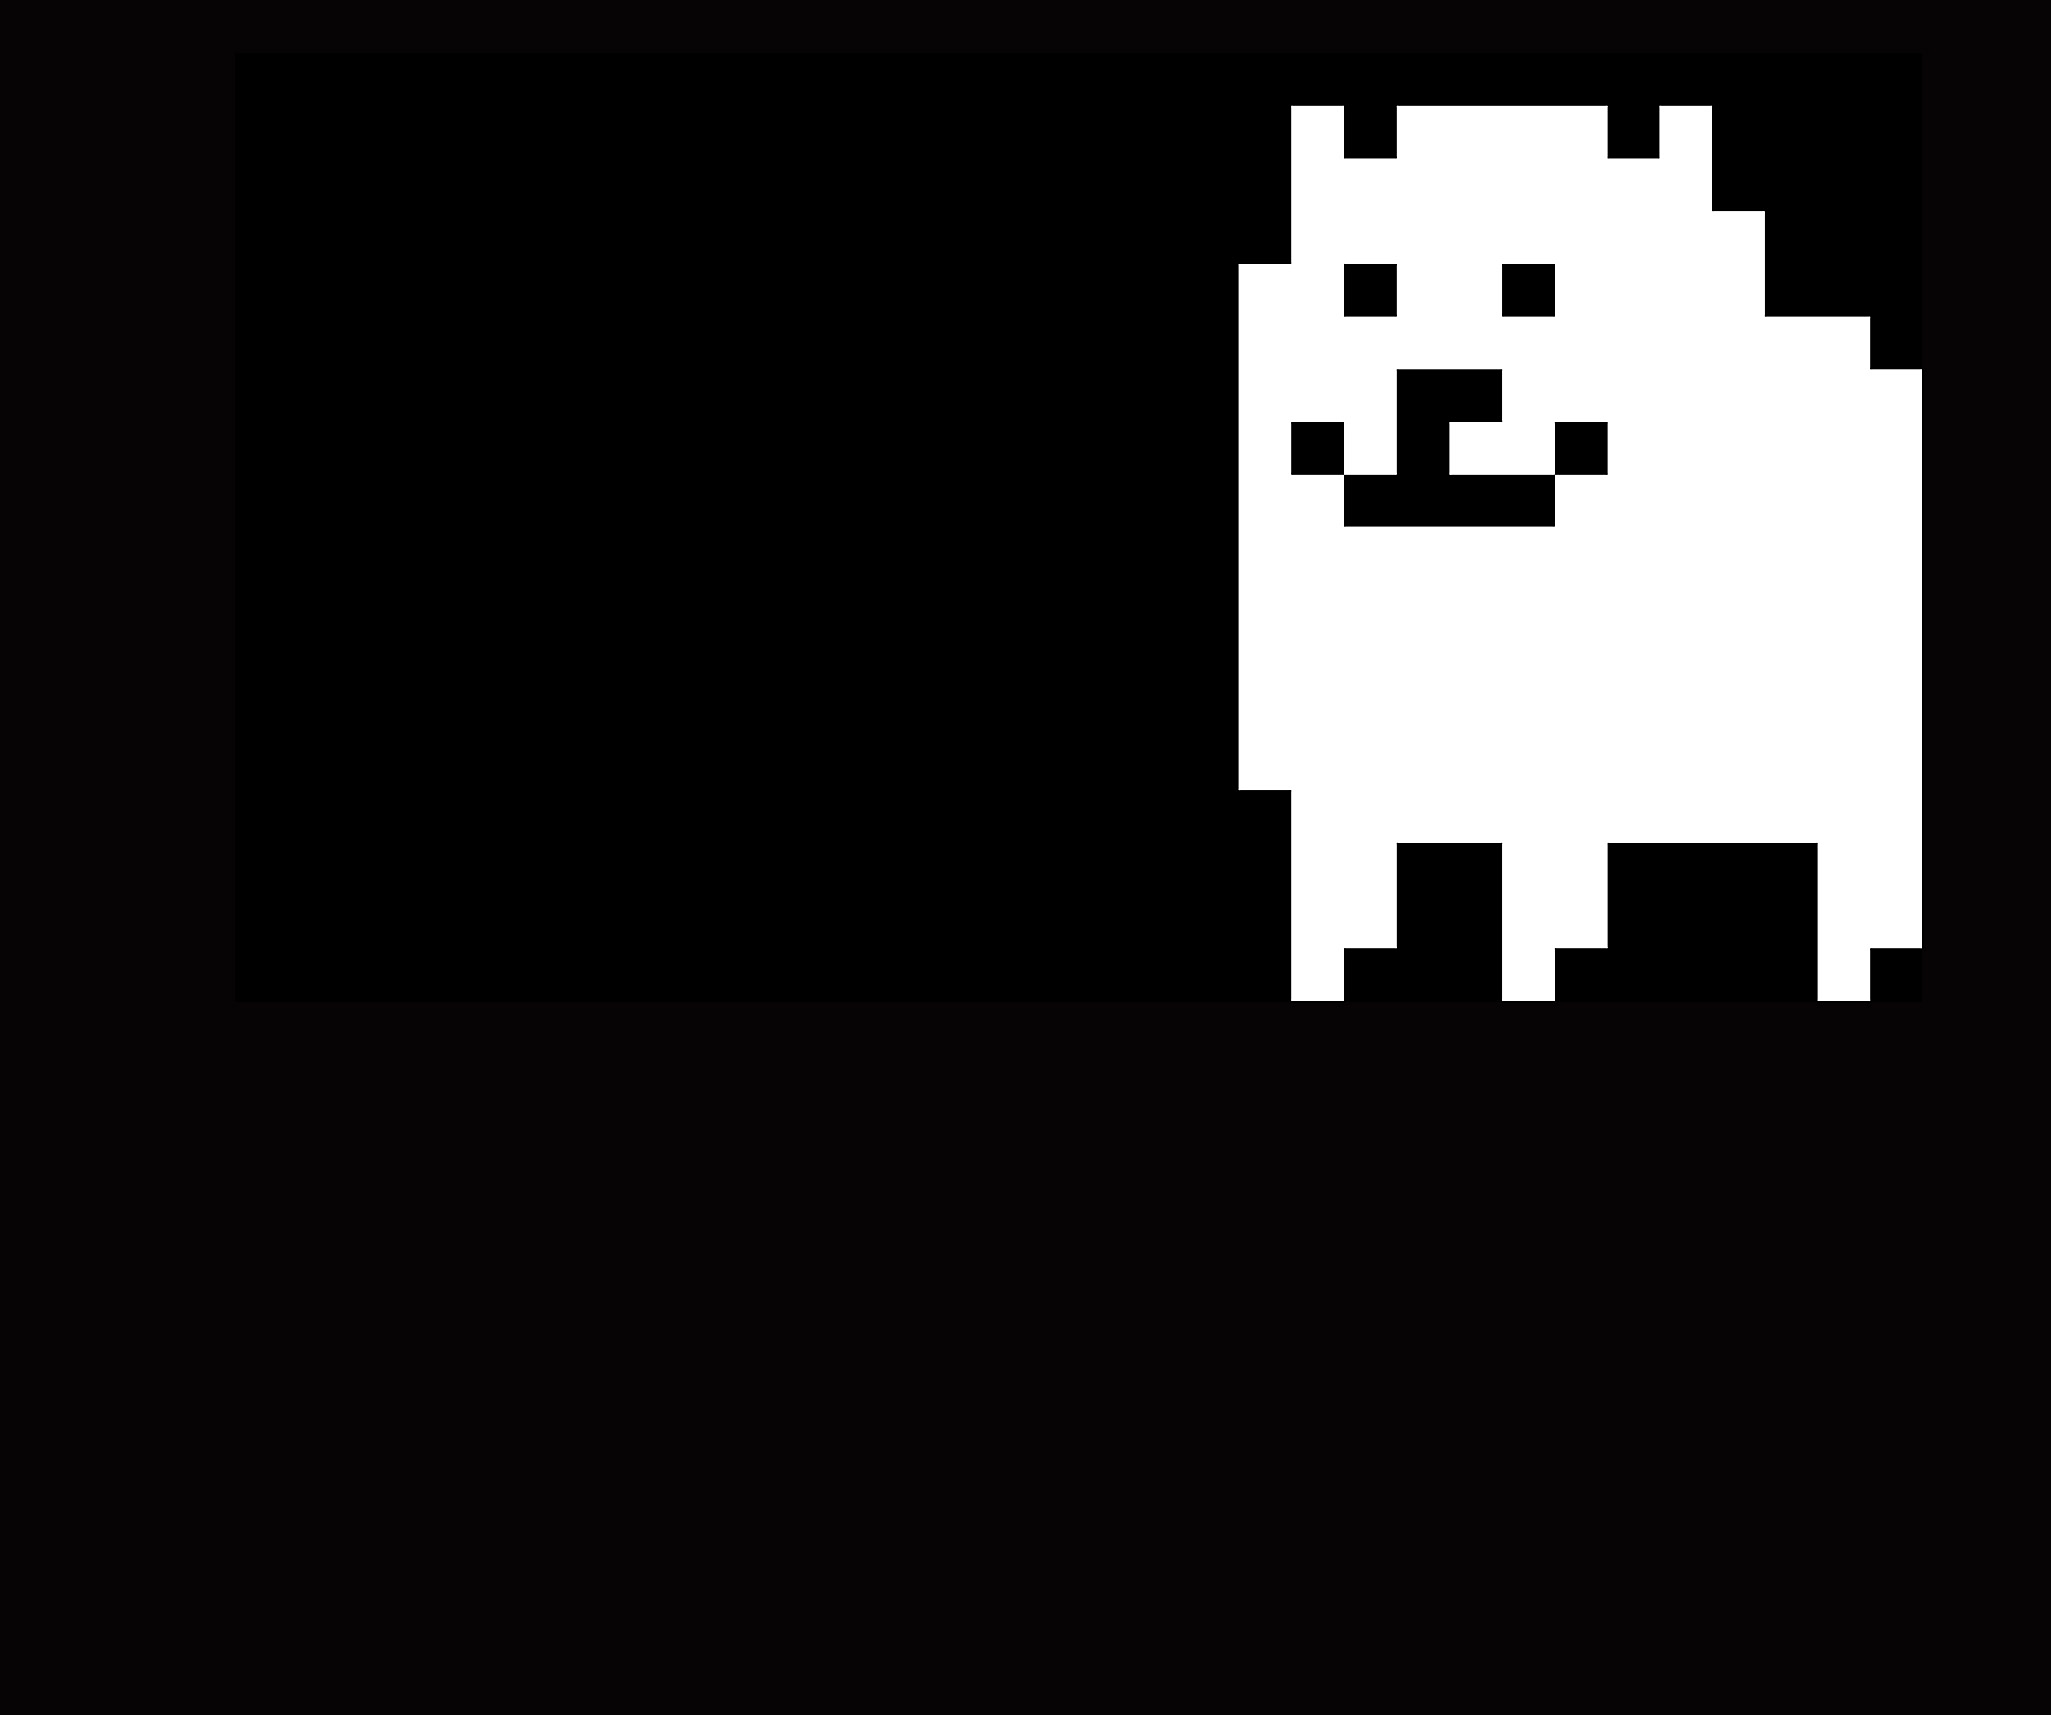 Undertale key-art featuring pixelated dog